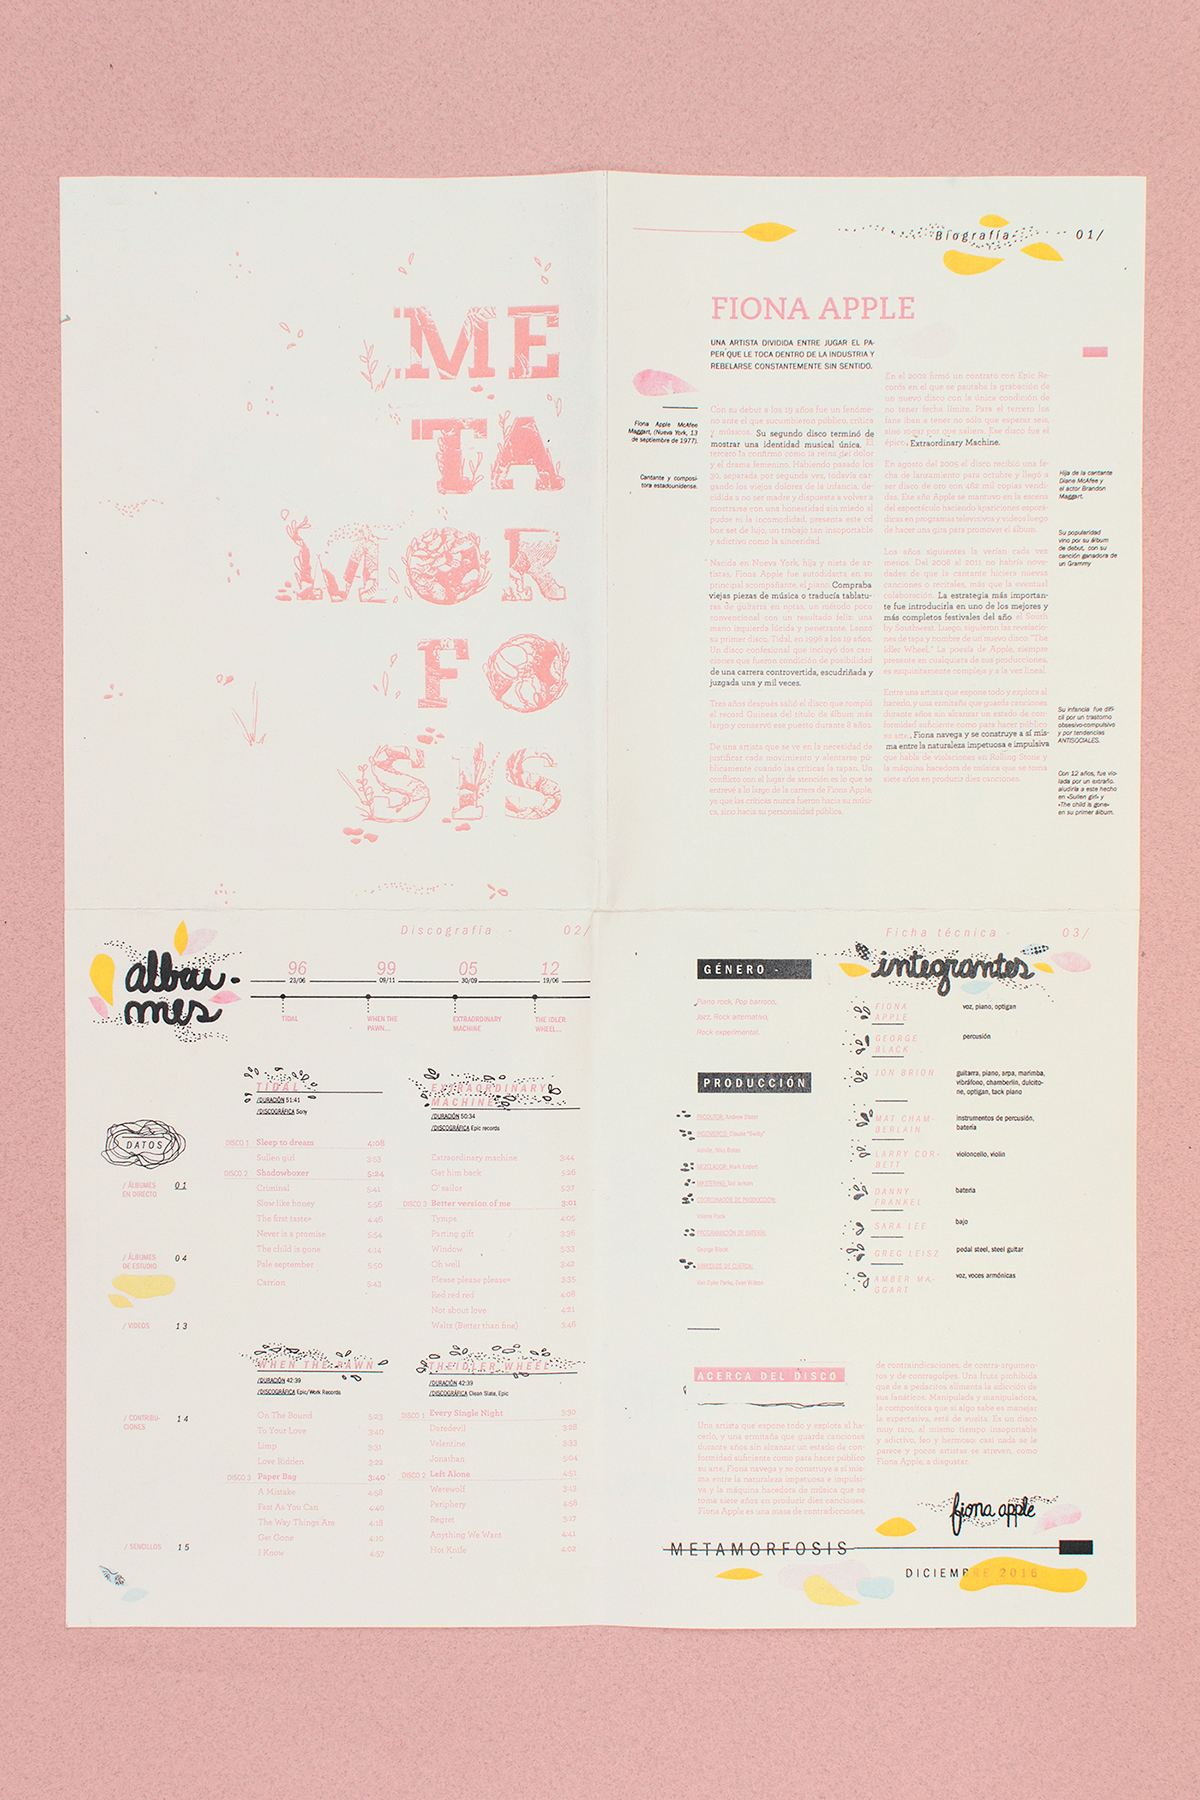 diseño gráfico Diseño editorial tipografia vinilos tipography graphic desing desing afiche fadu Gabriele